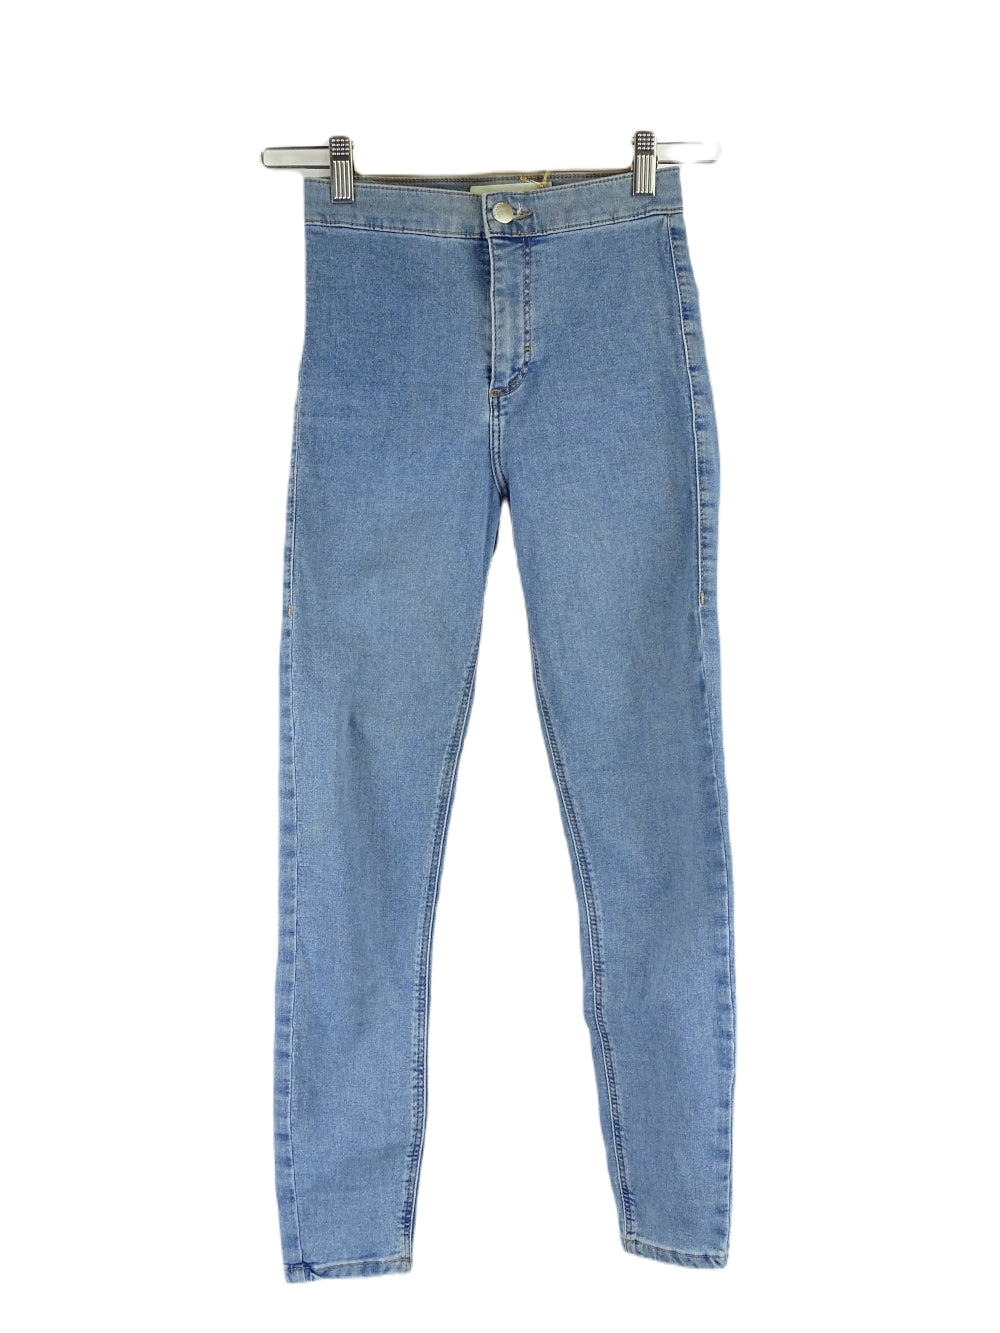 Topshop Blue Skinny Jeans Petite AU 7 / 25